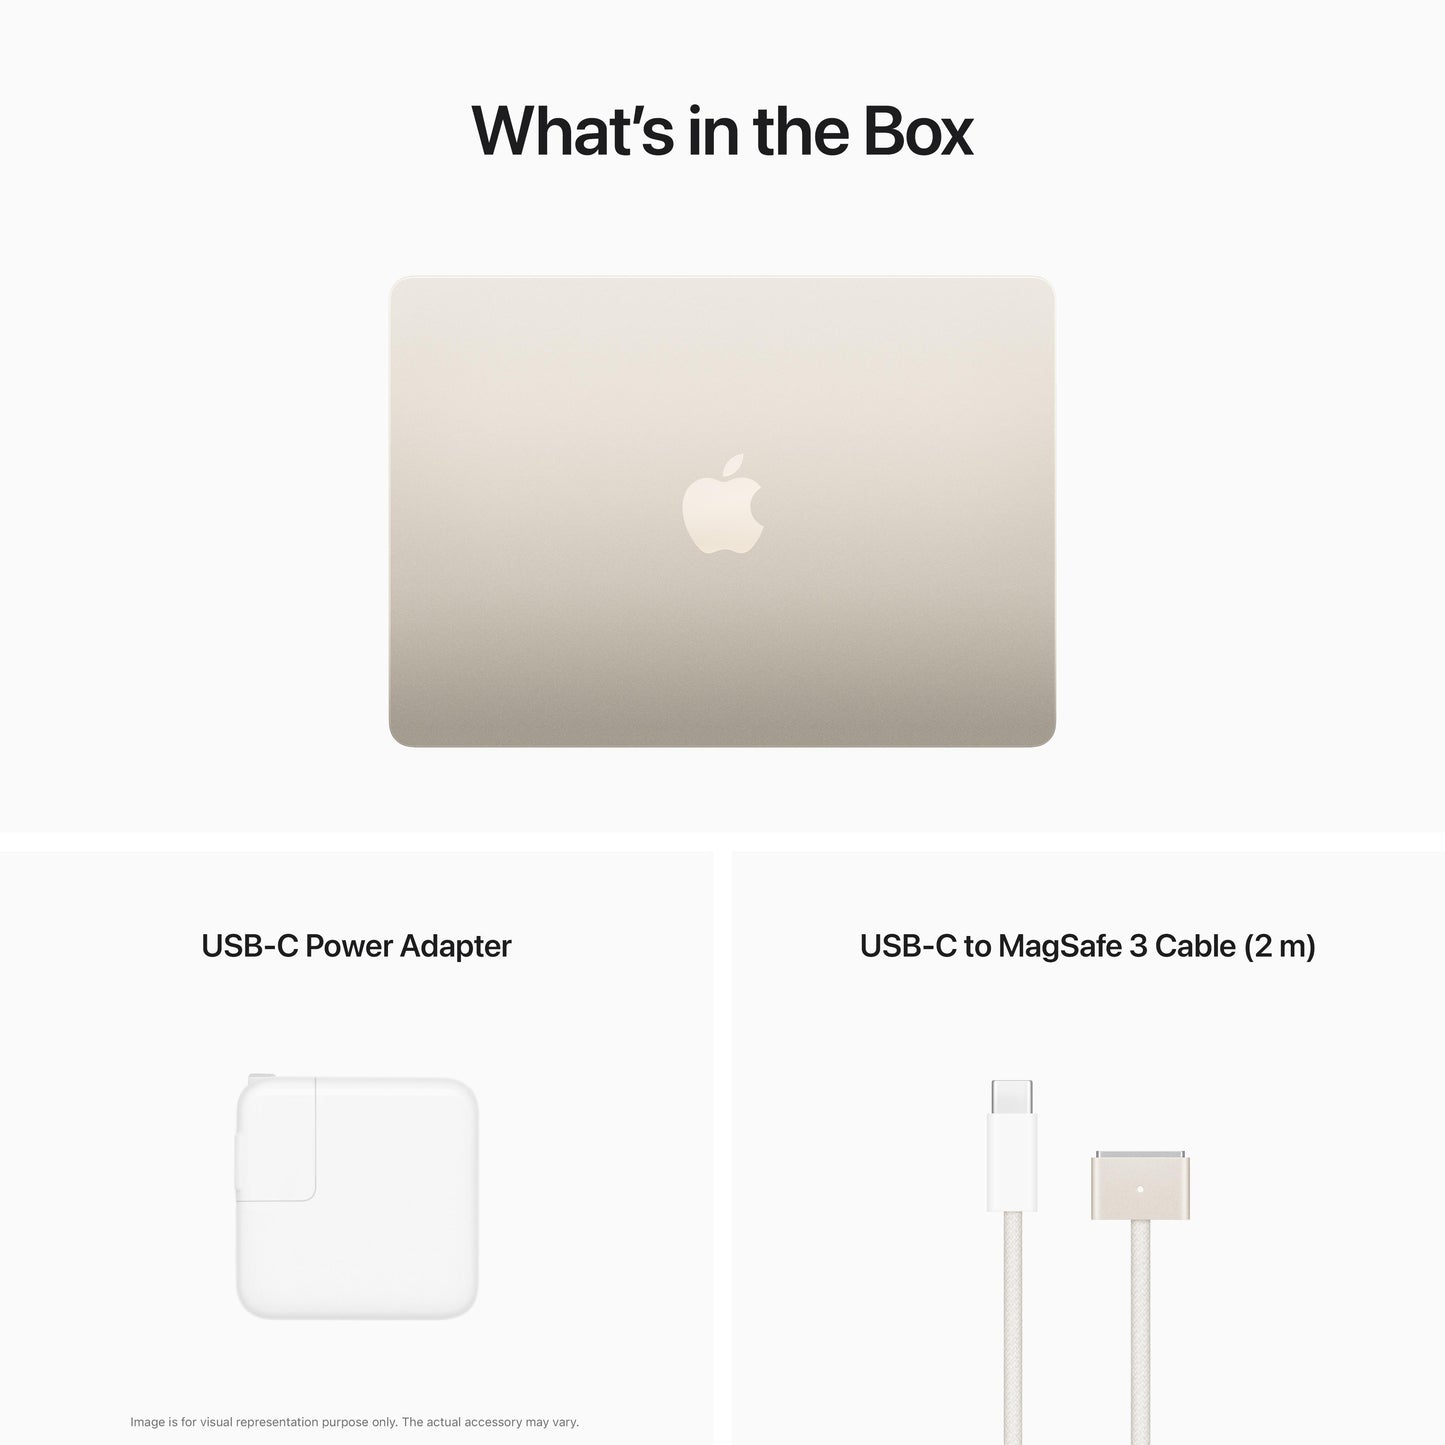 13-inch MacBook Air: Apple M2 chip with 8?core CPU and 8?core GPU, 256GB SSD - Starlight